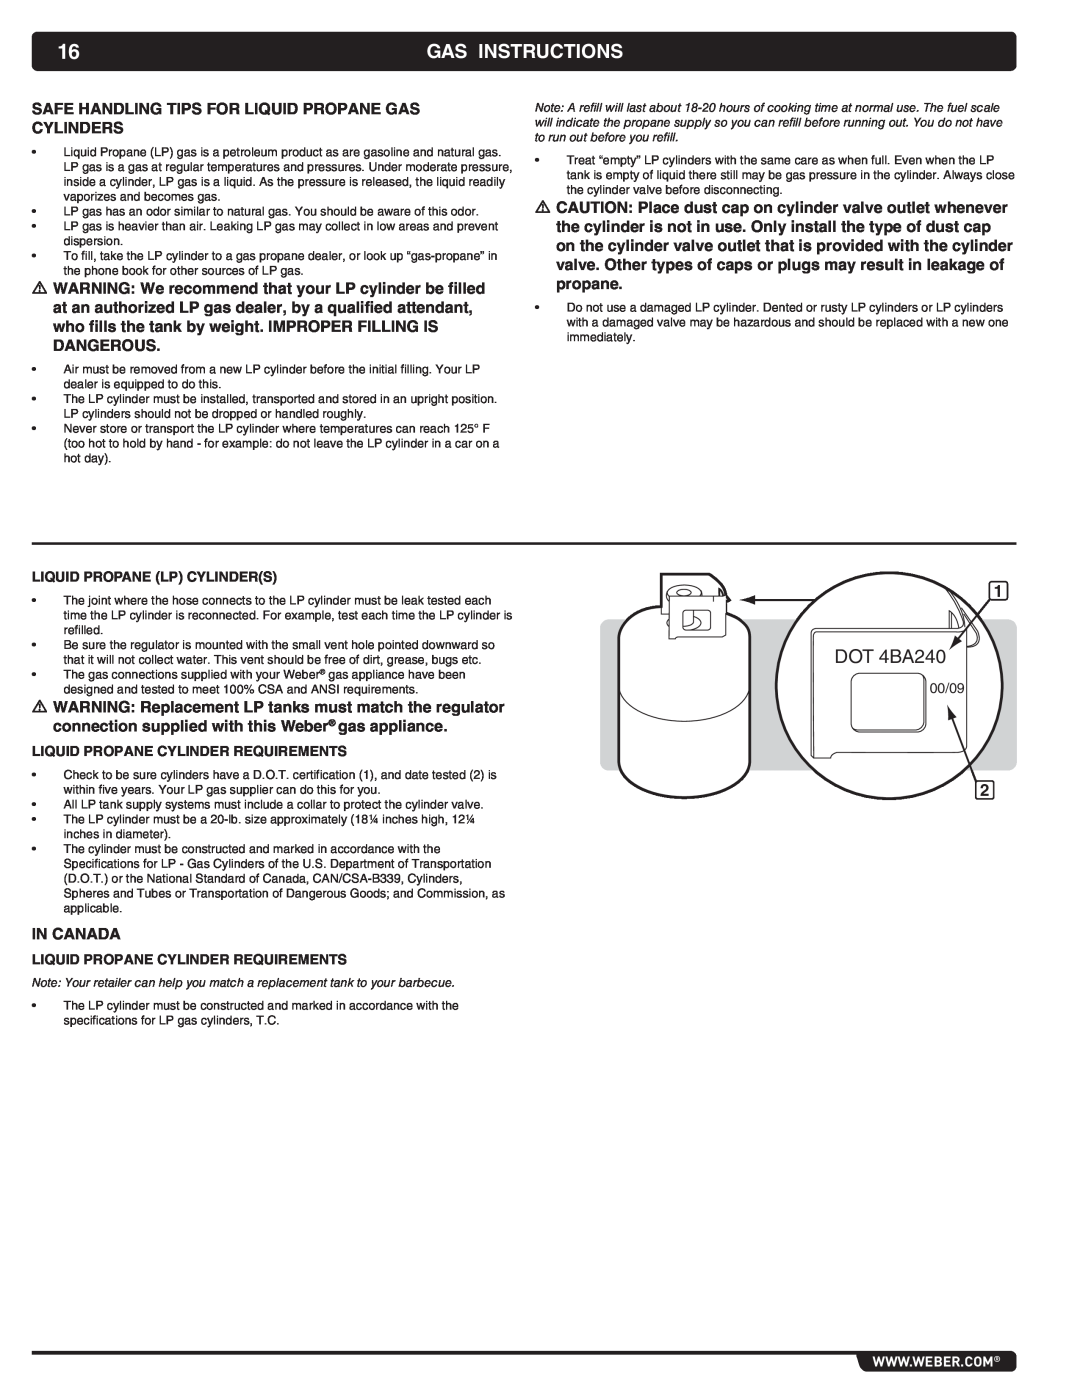 Weber 56069 manual Gas Instructions, DOT 4BA240 